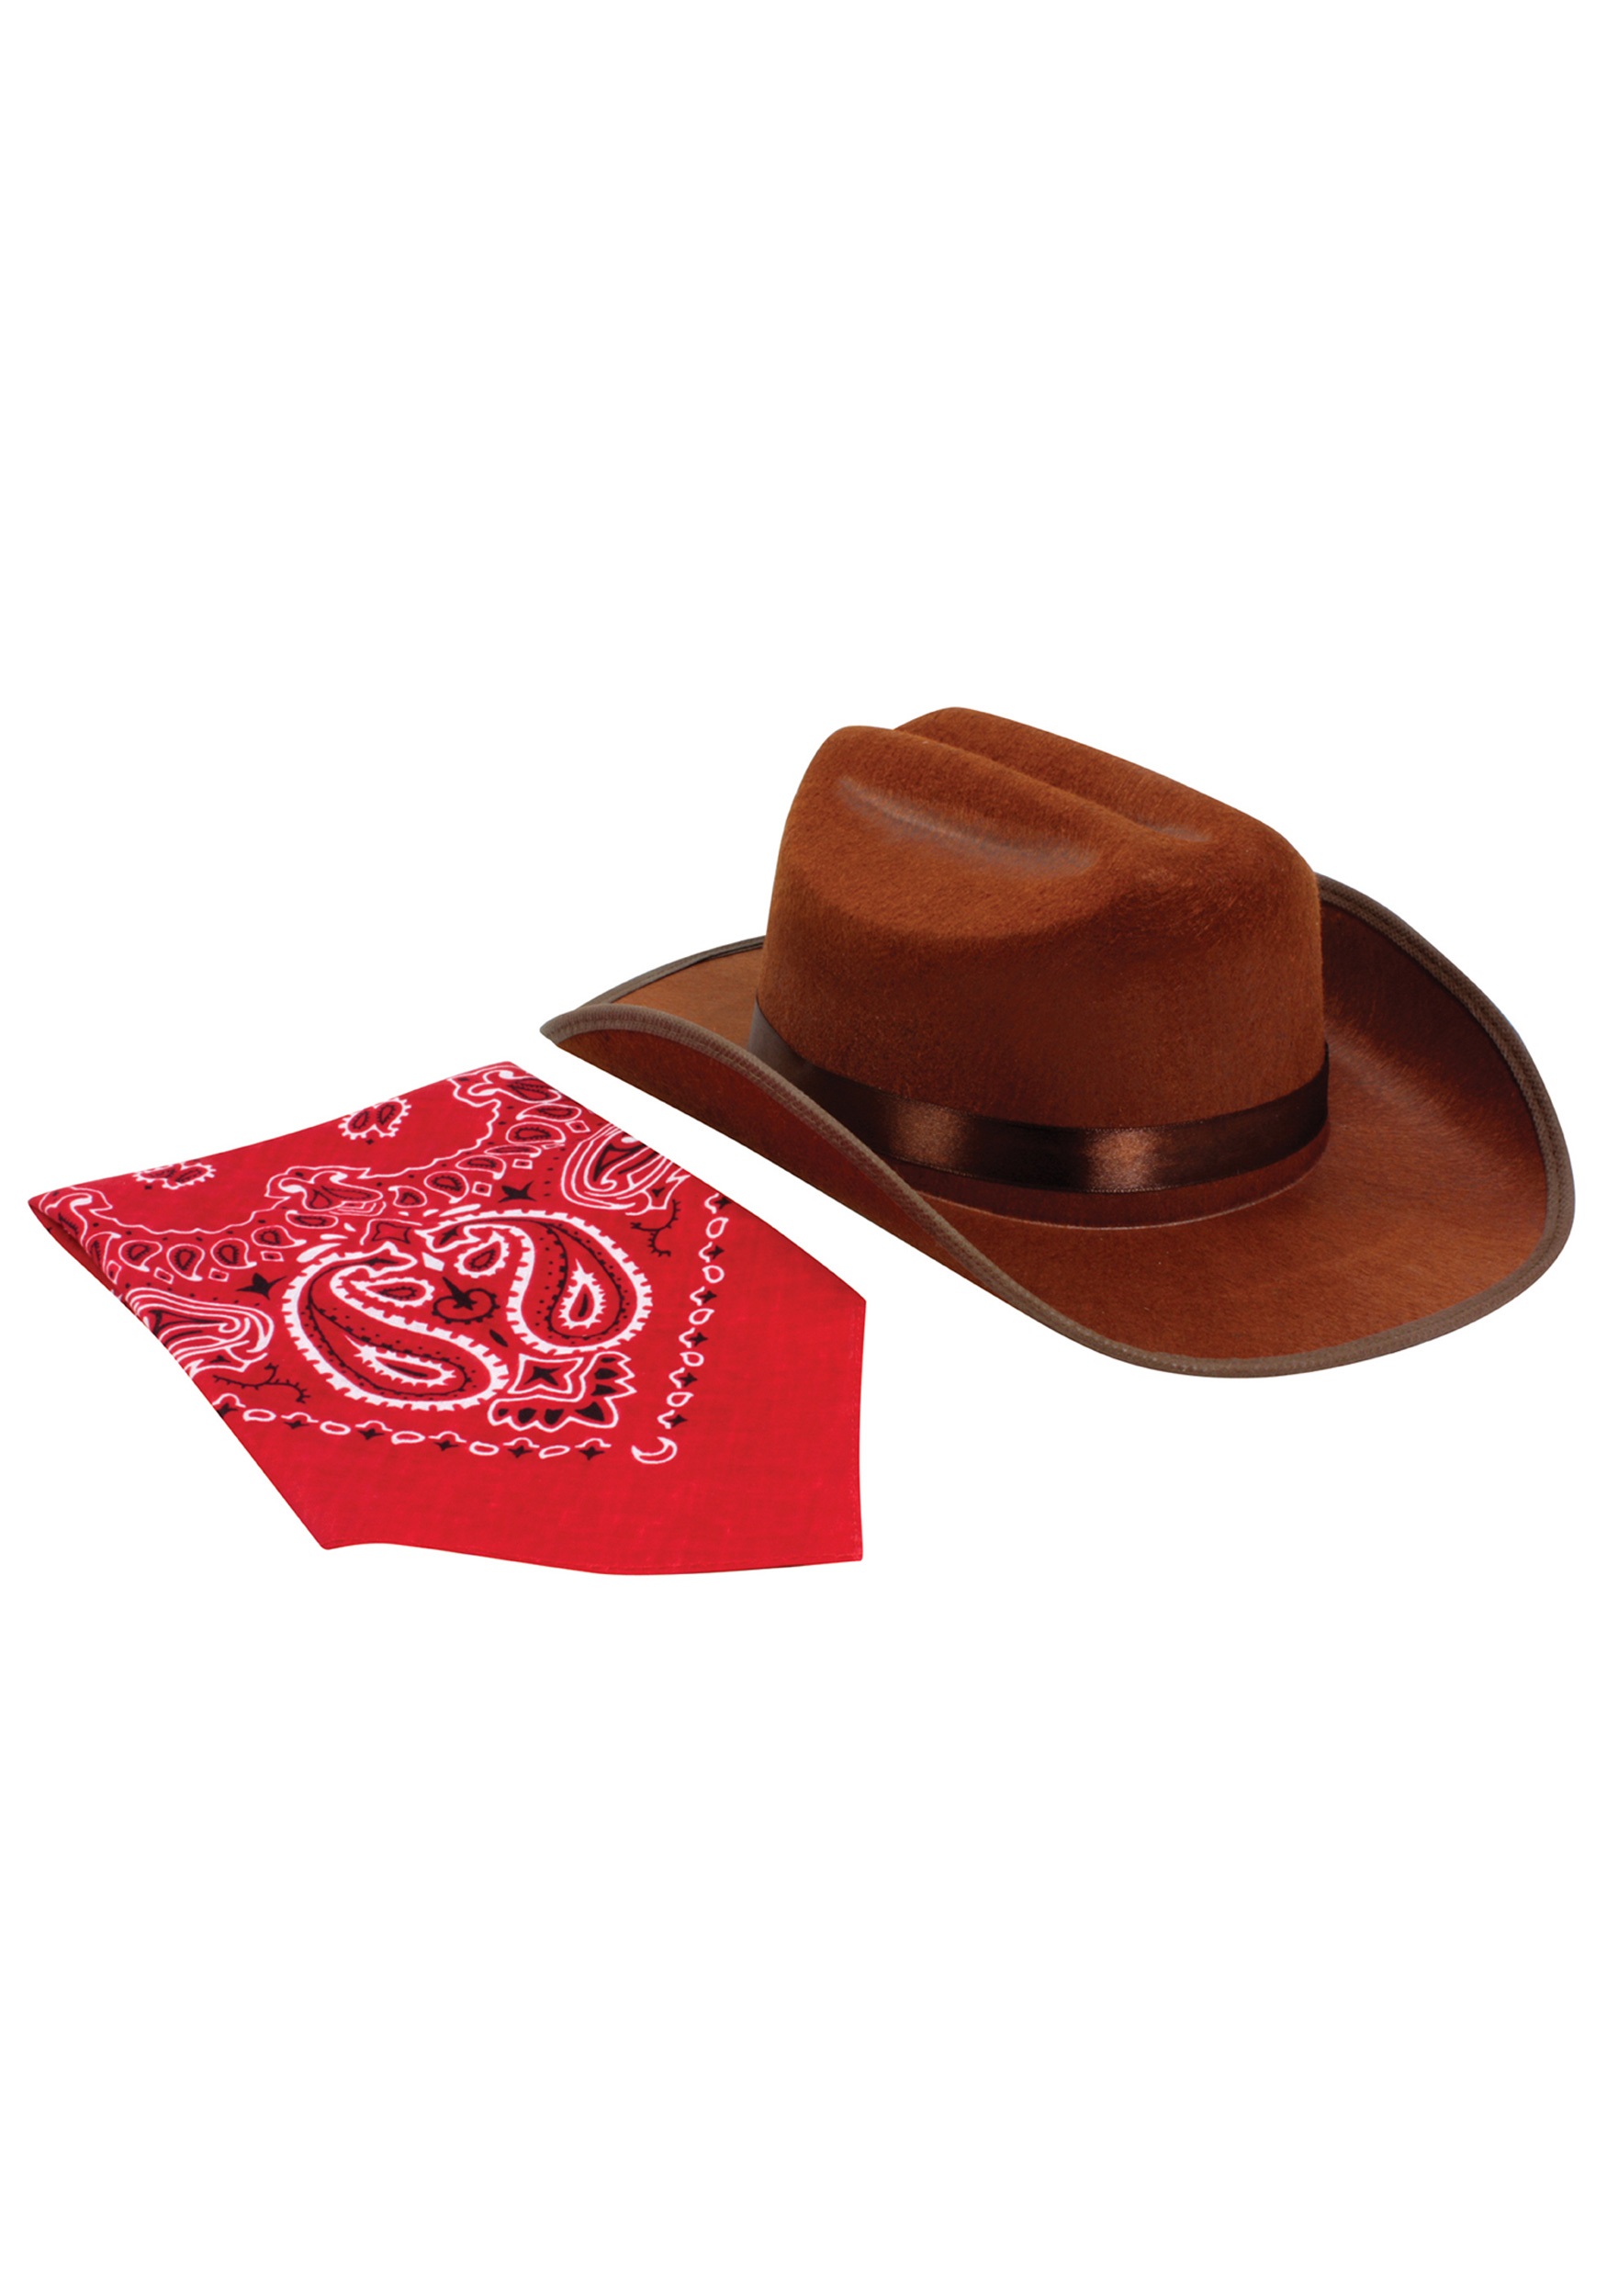 Brown Junior Cowboy Costume Hat and Bandana Set